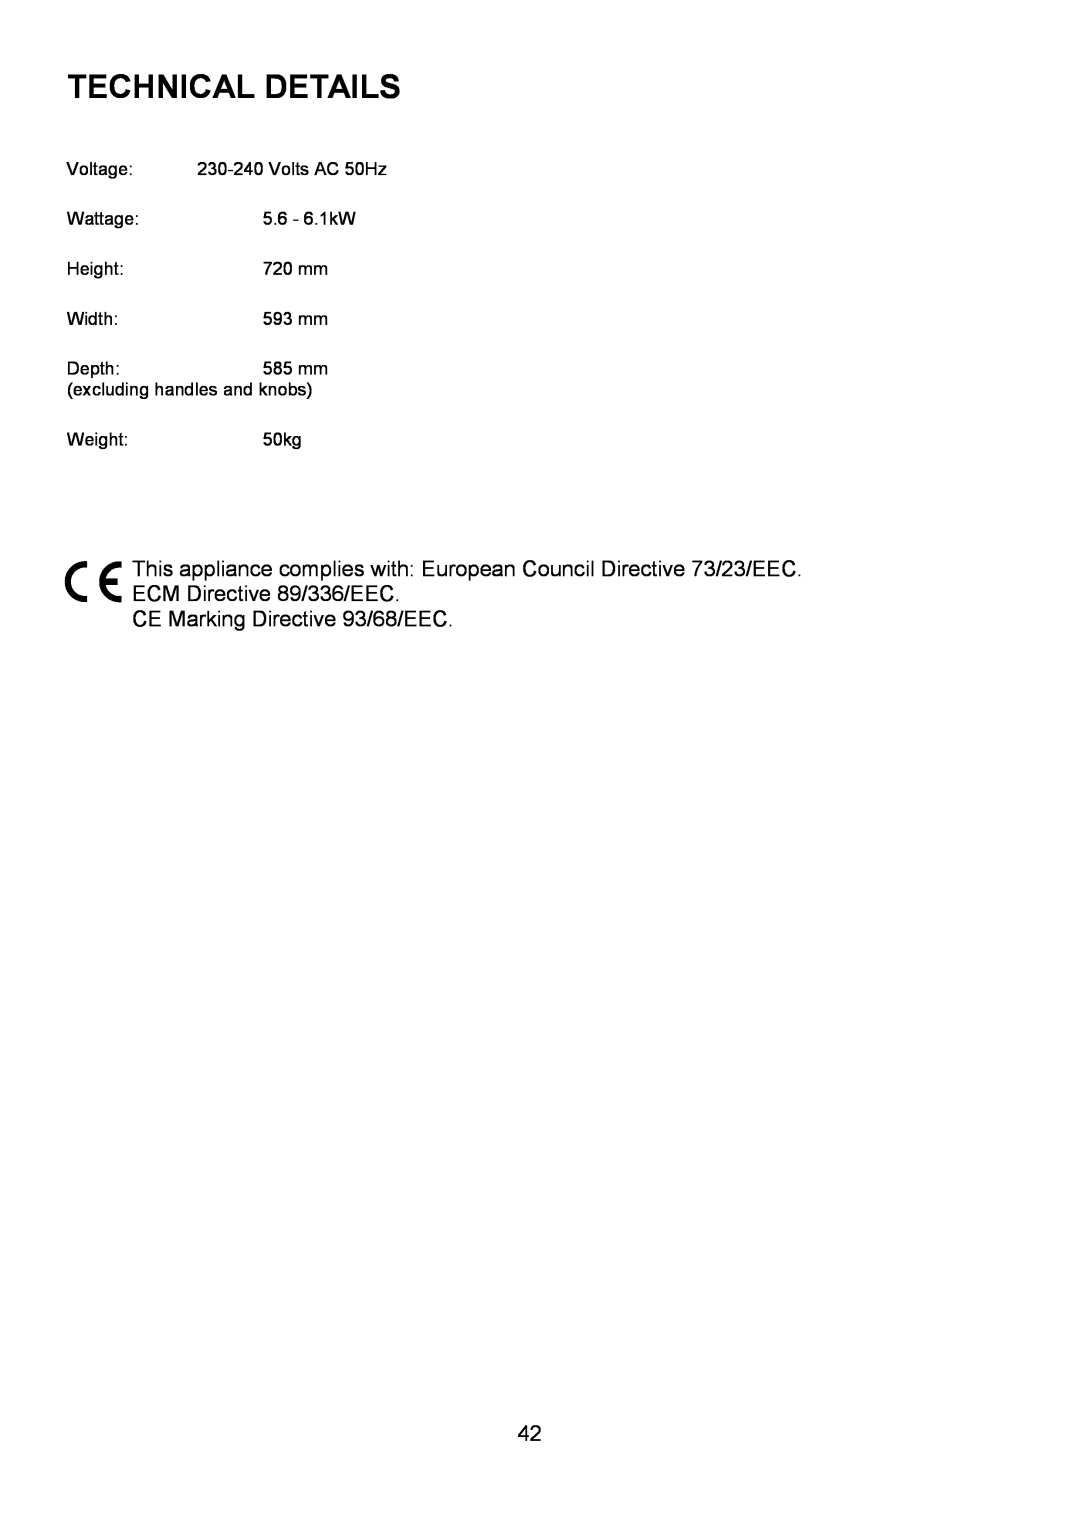 AEG U7101-4, 311704300 manual Technical Details, CE Marking Directive 93/68/EEC 